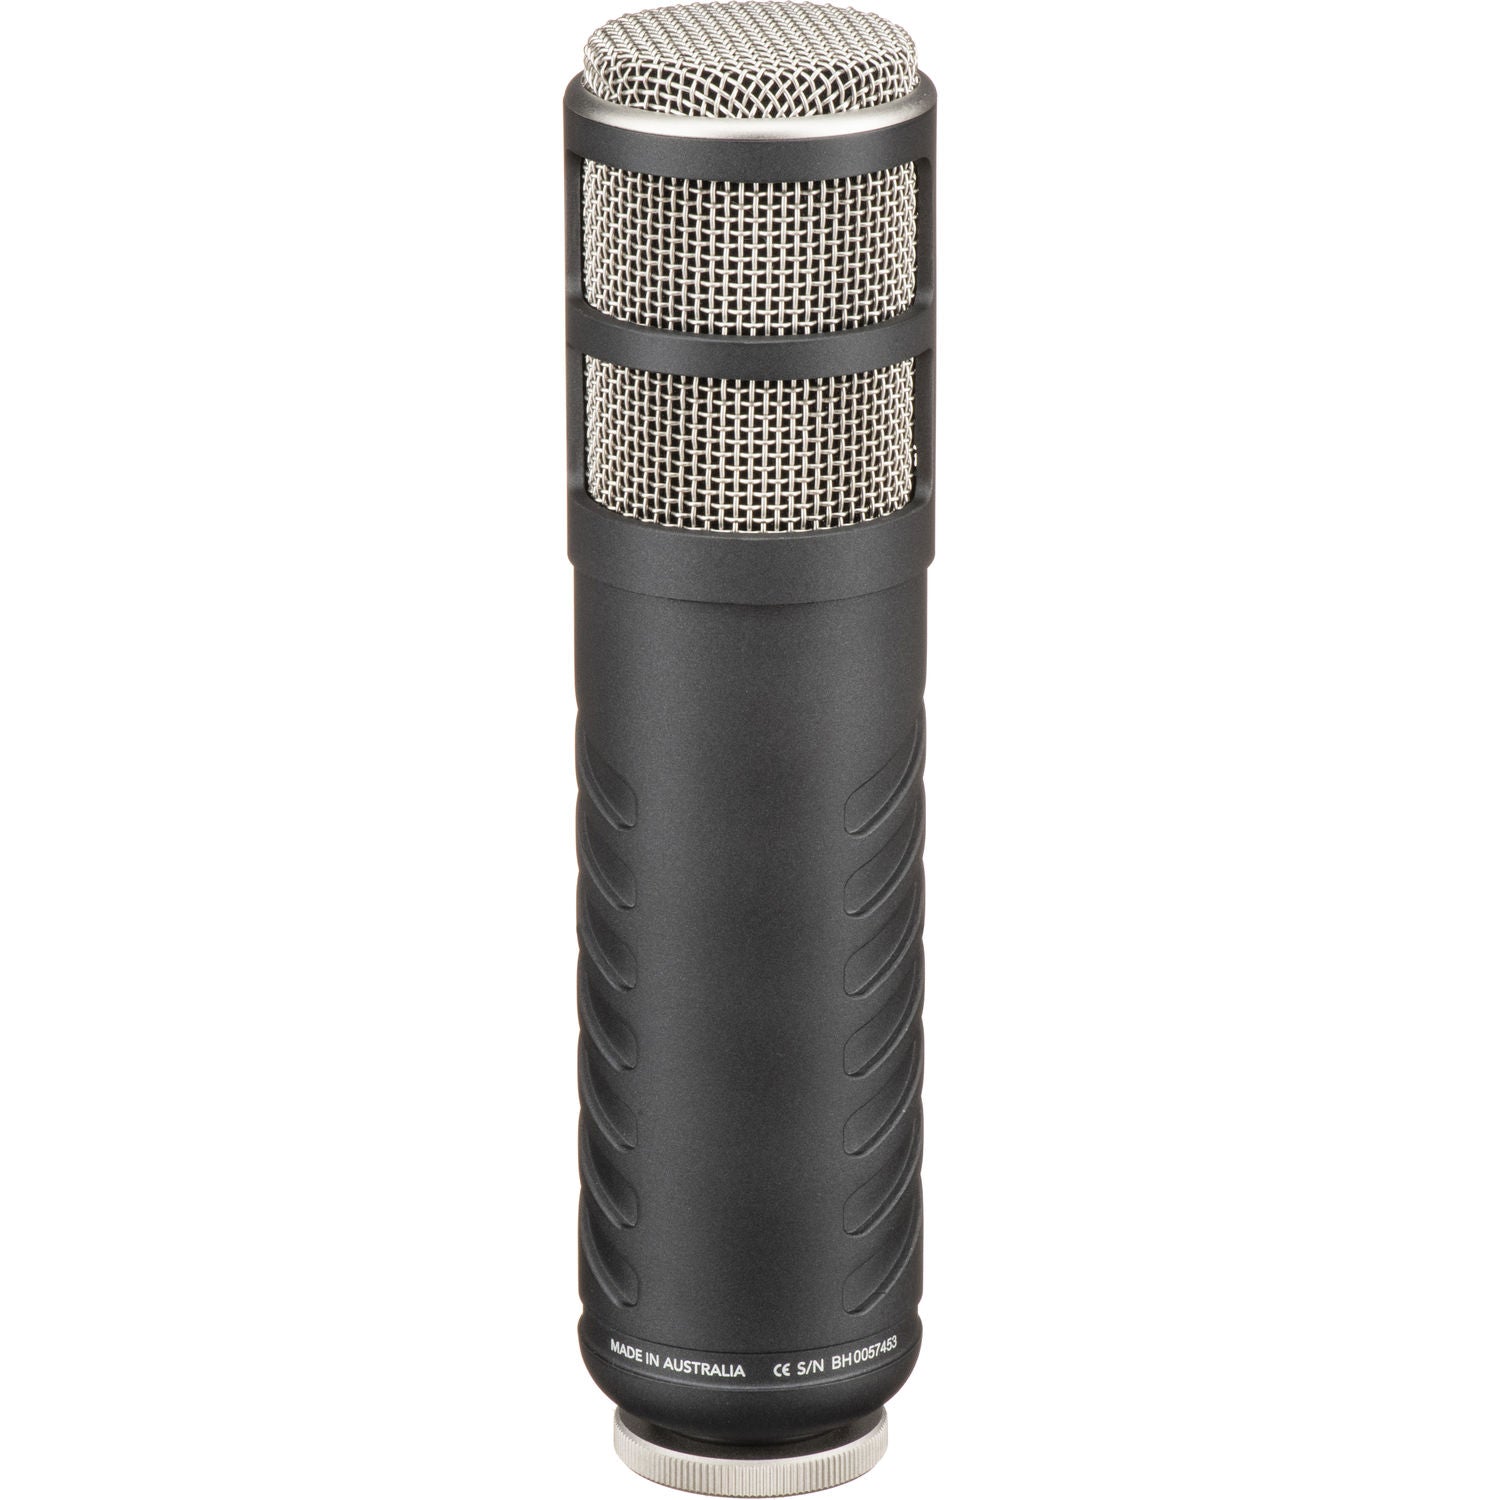 RØDE Procaster Broadcast Quality Dynamic Microphone